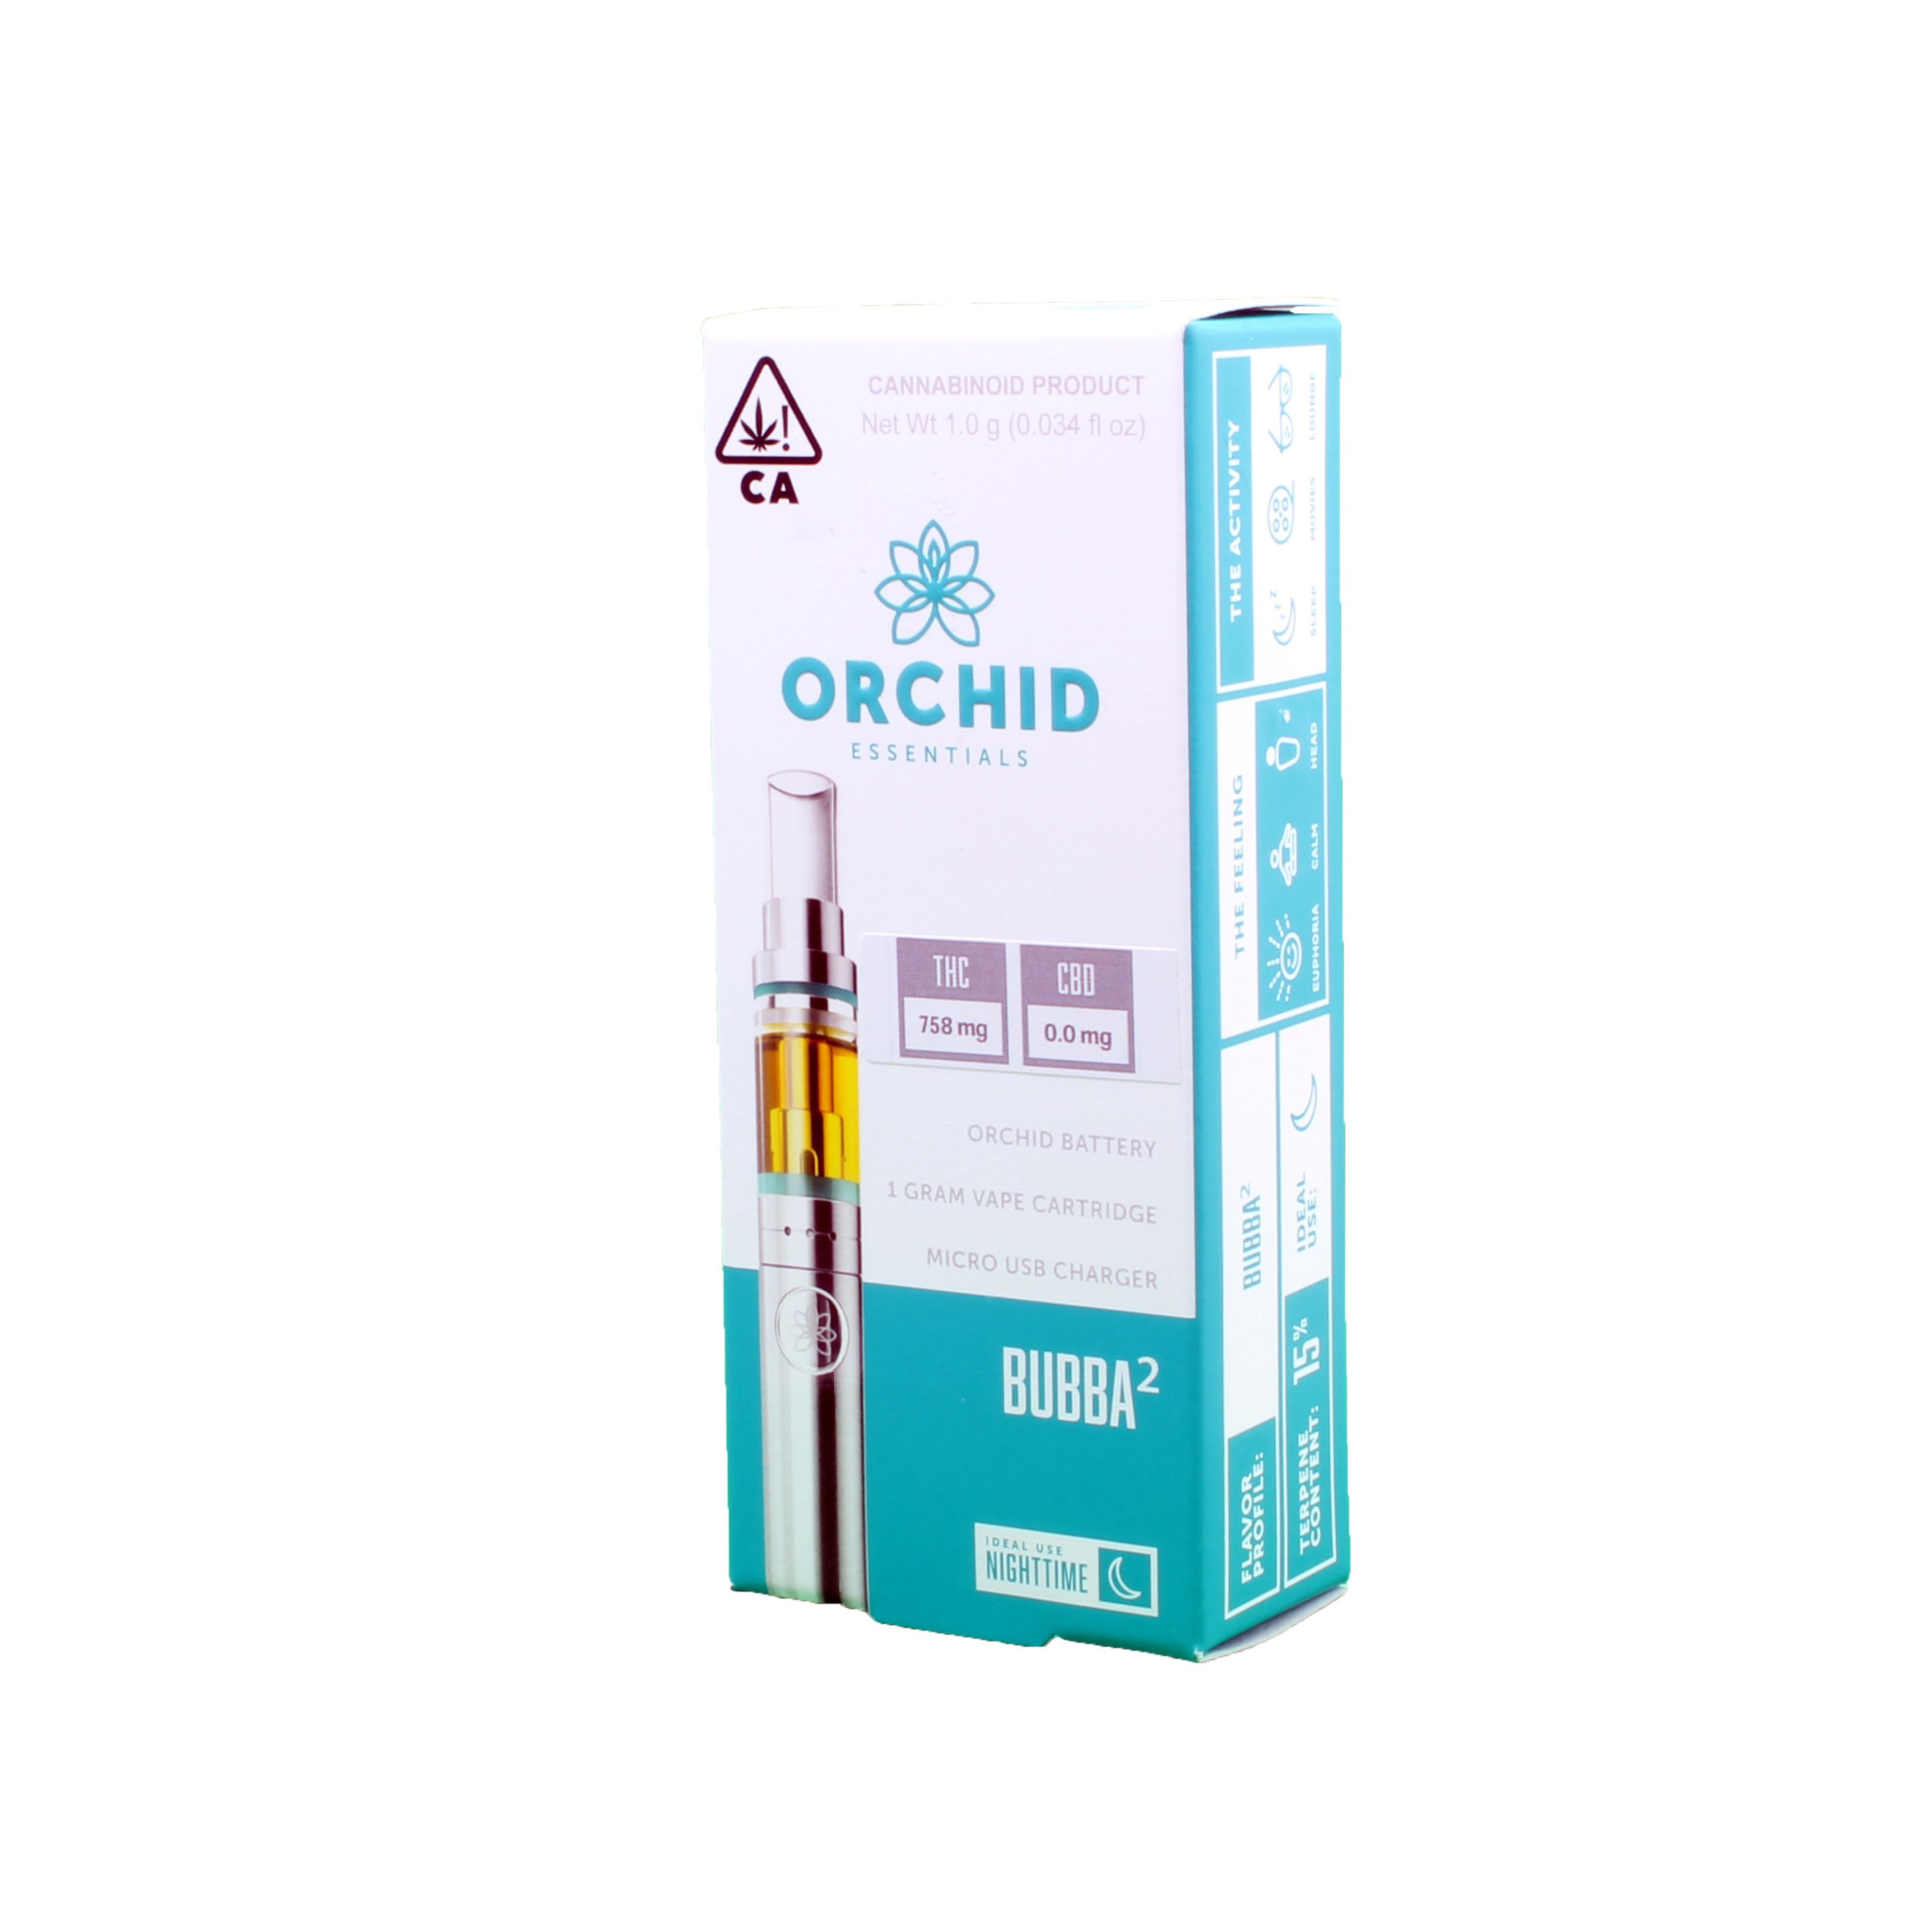 Orchid Essentials - Bubba Cartridge Kit